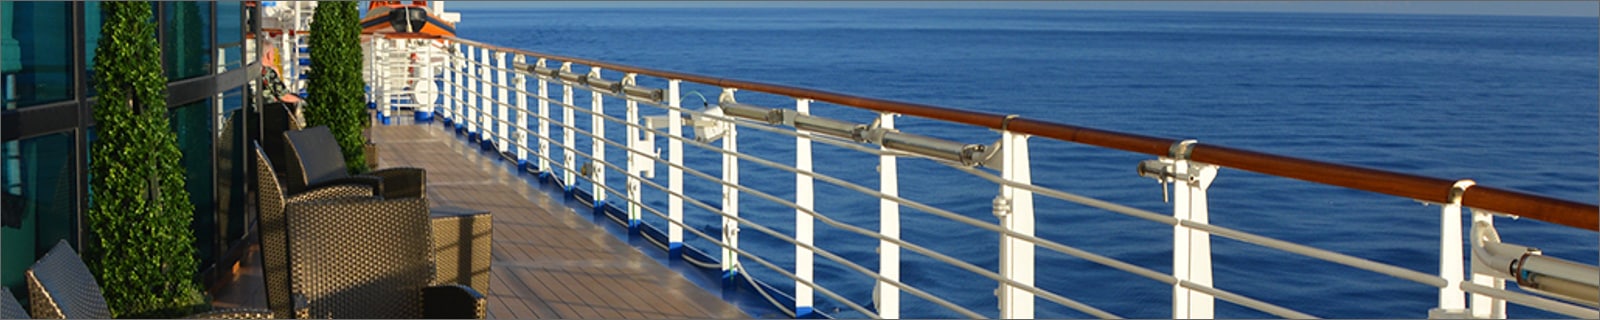 Royal Caribbean Cruises Into a New Era